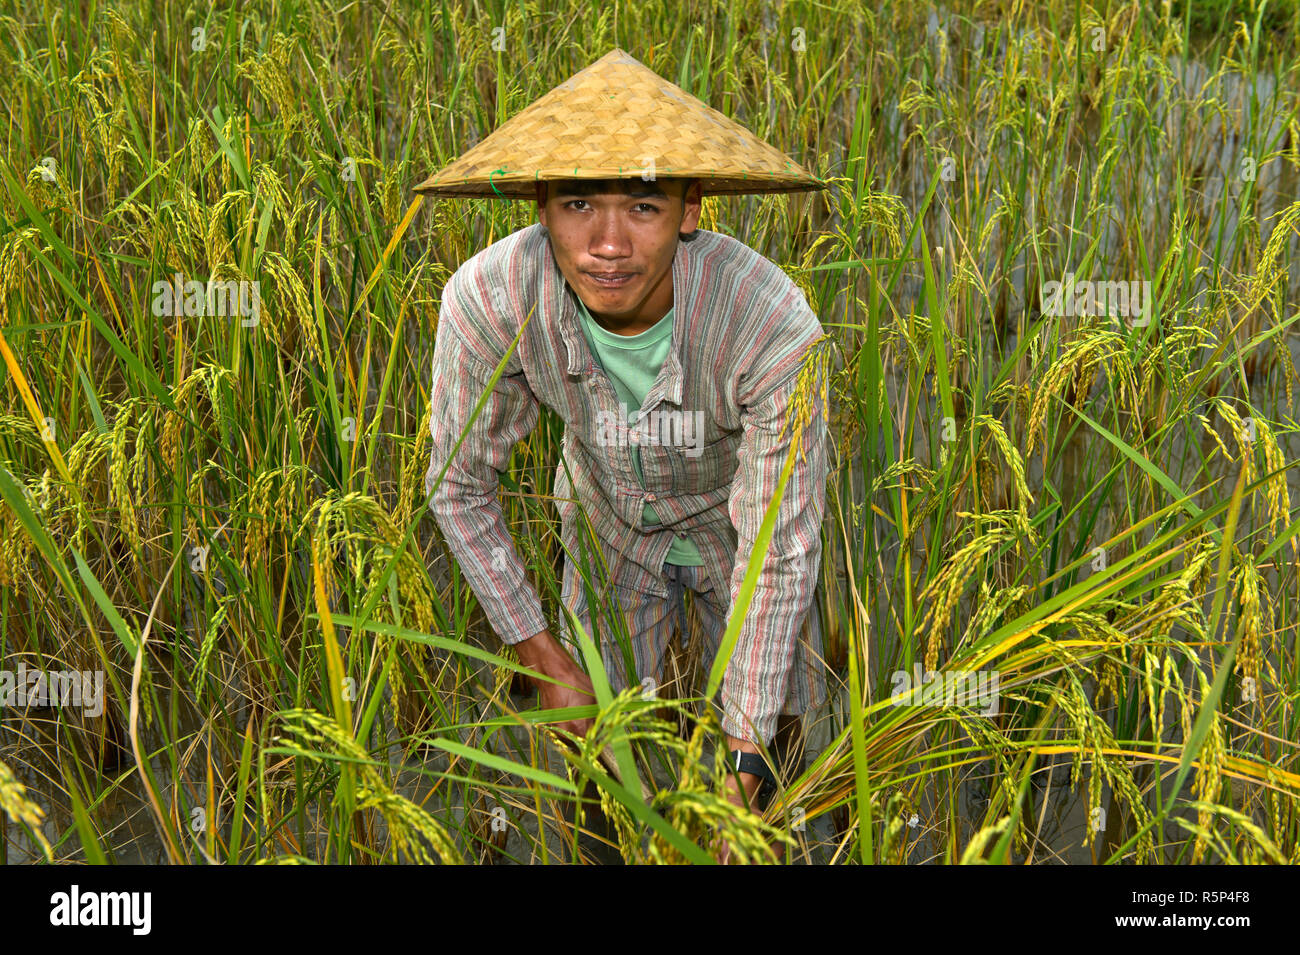 Rice farmer standing in a ripe rice field, Luang Prabang, Laos Stock Photo